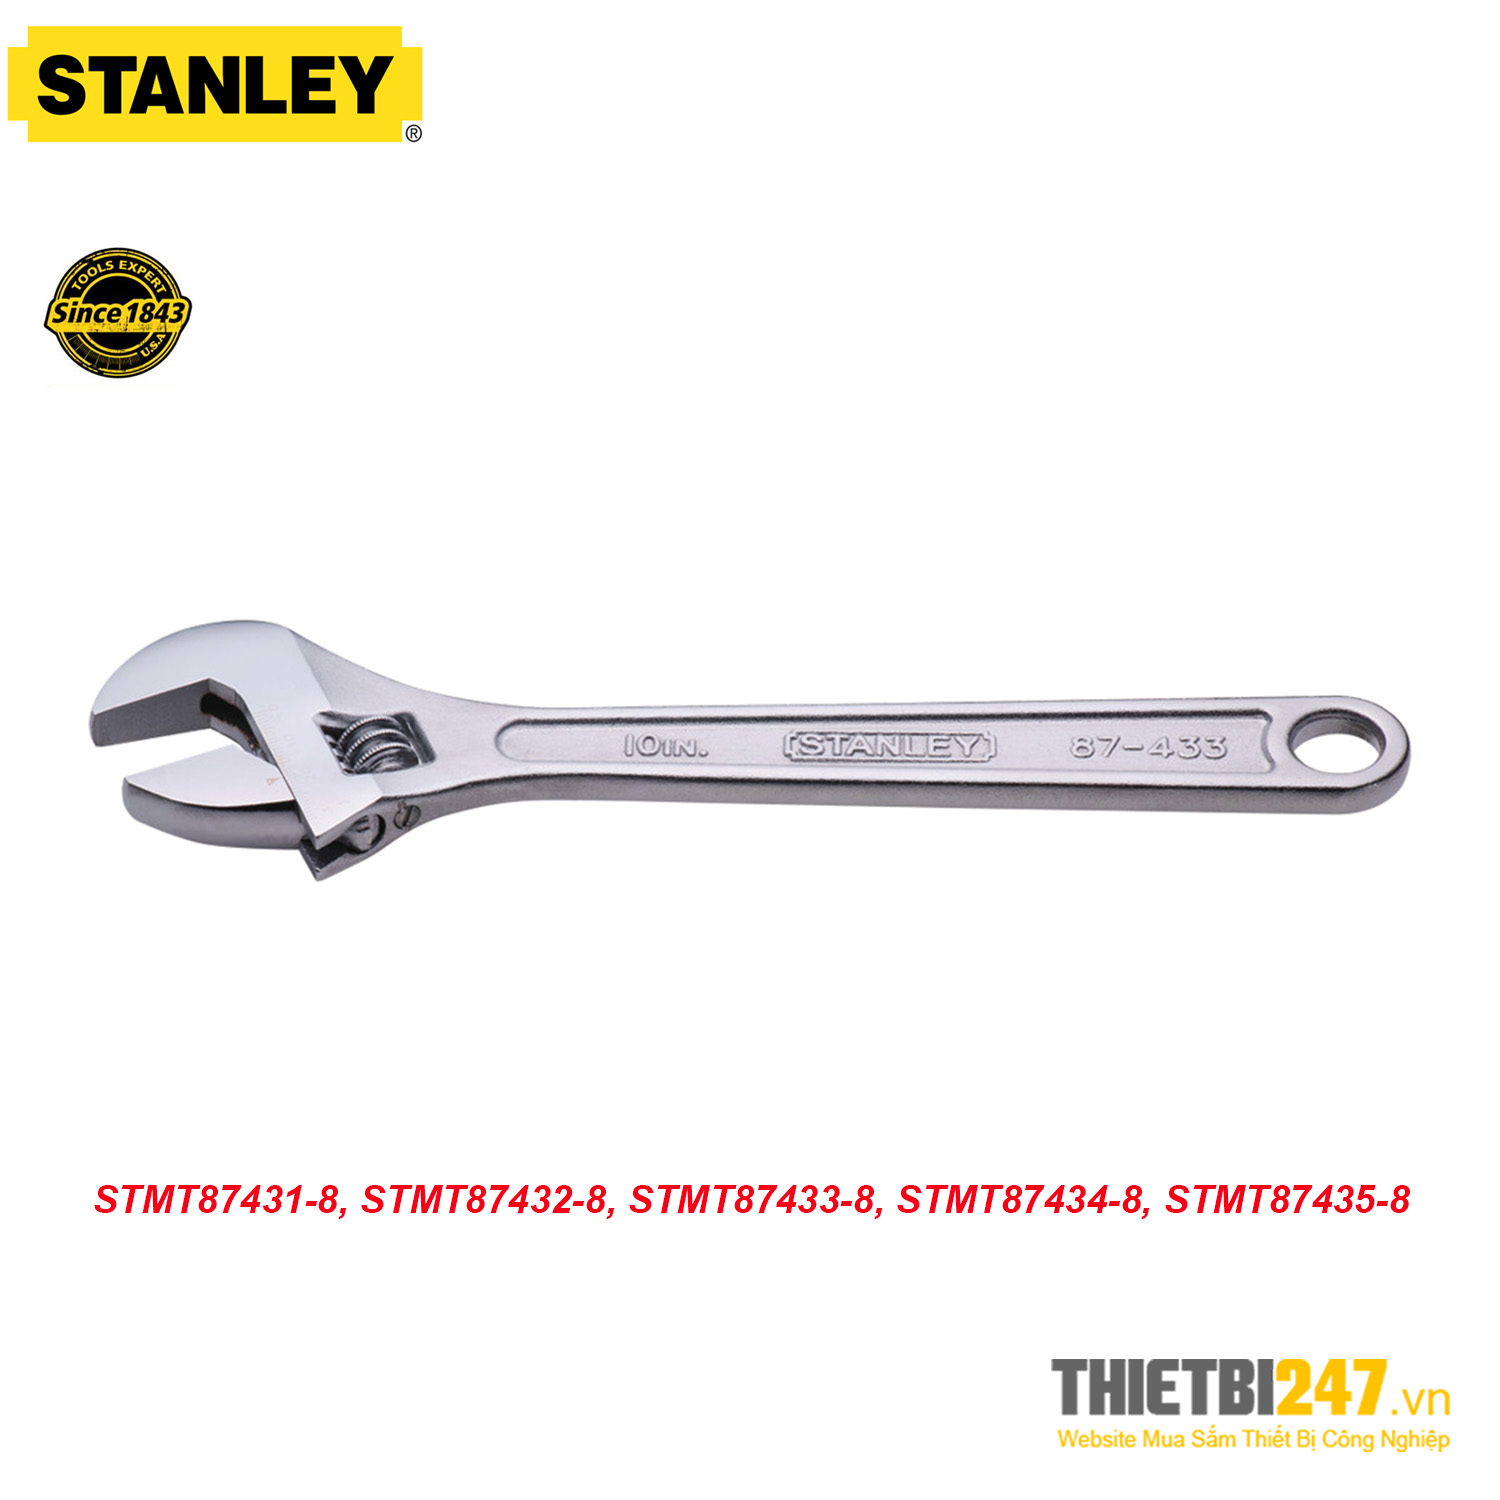 Mỏ lết Stanley Seri STMT8743-8